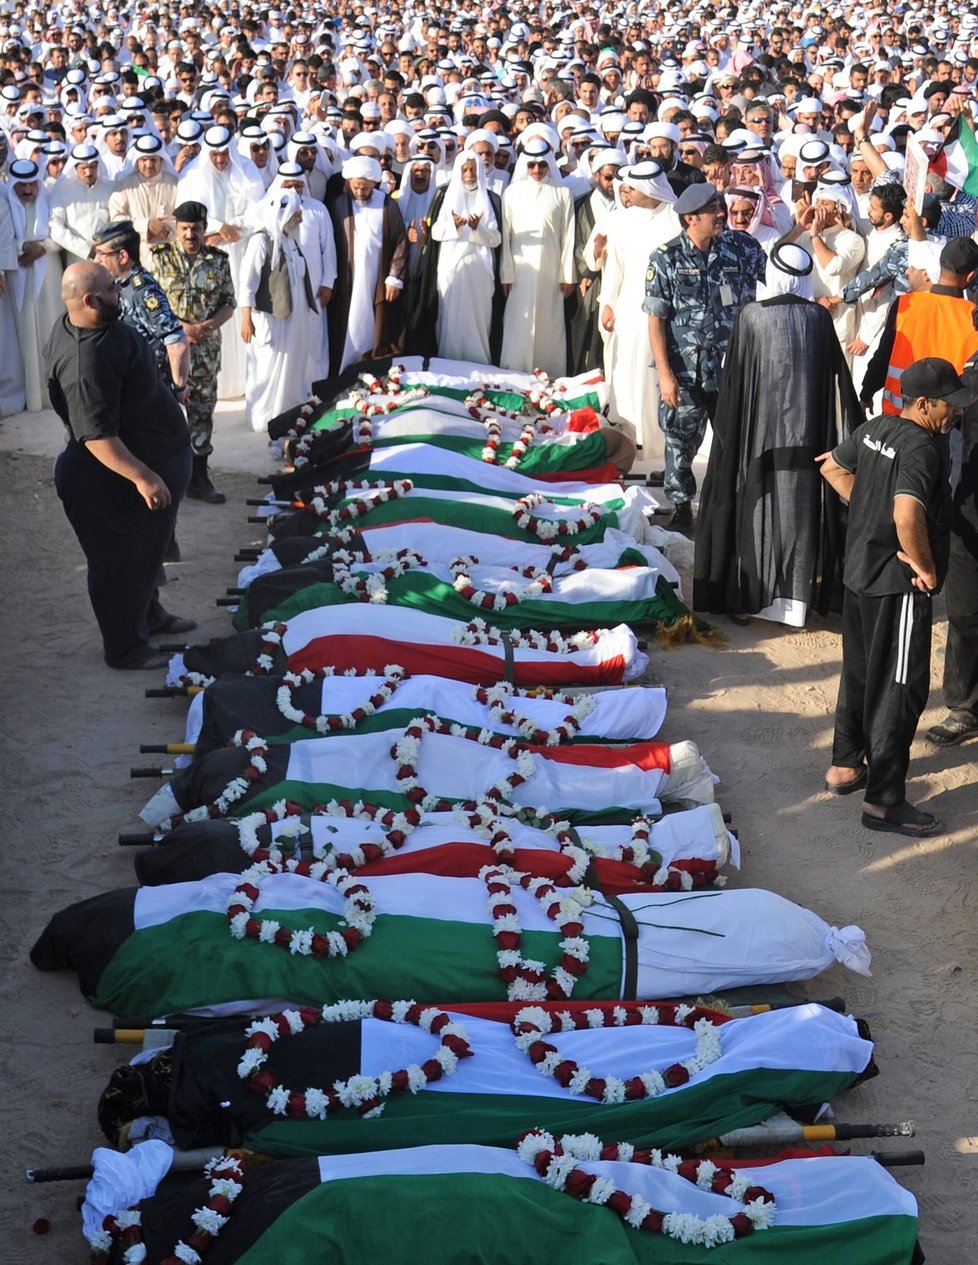 Podobný incident se odehrál nedávno i v Kuvajtu - Kuvajťané pohřbili mrtvé.